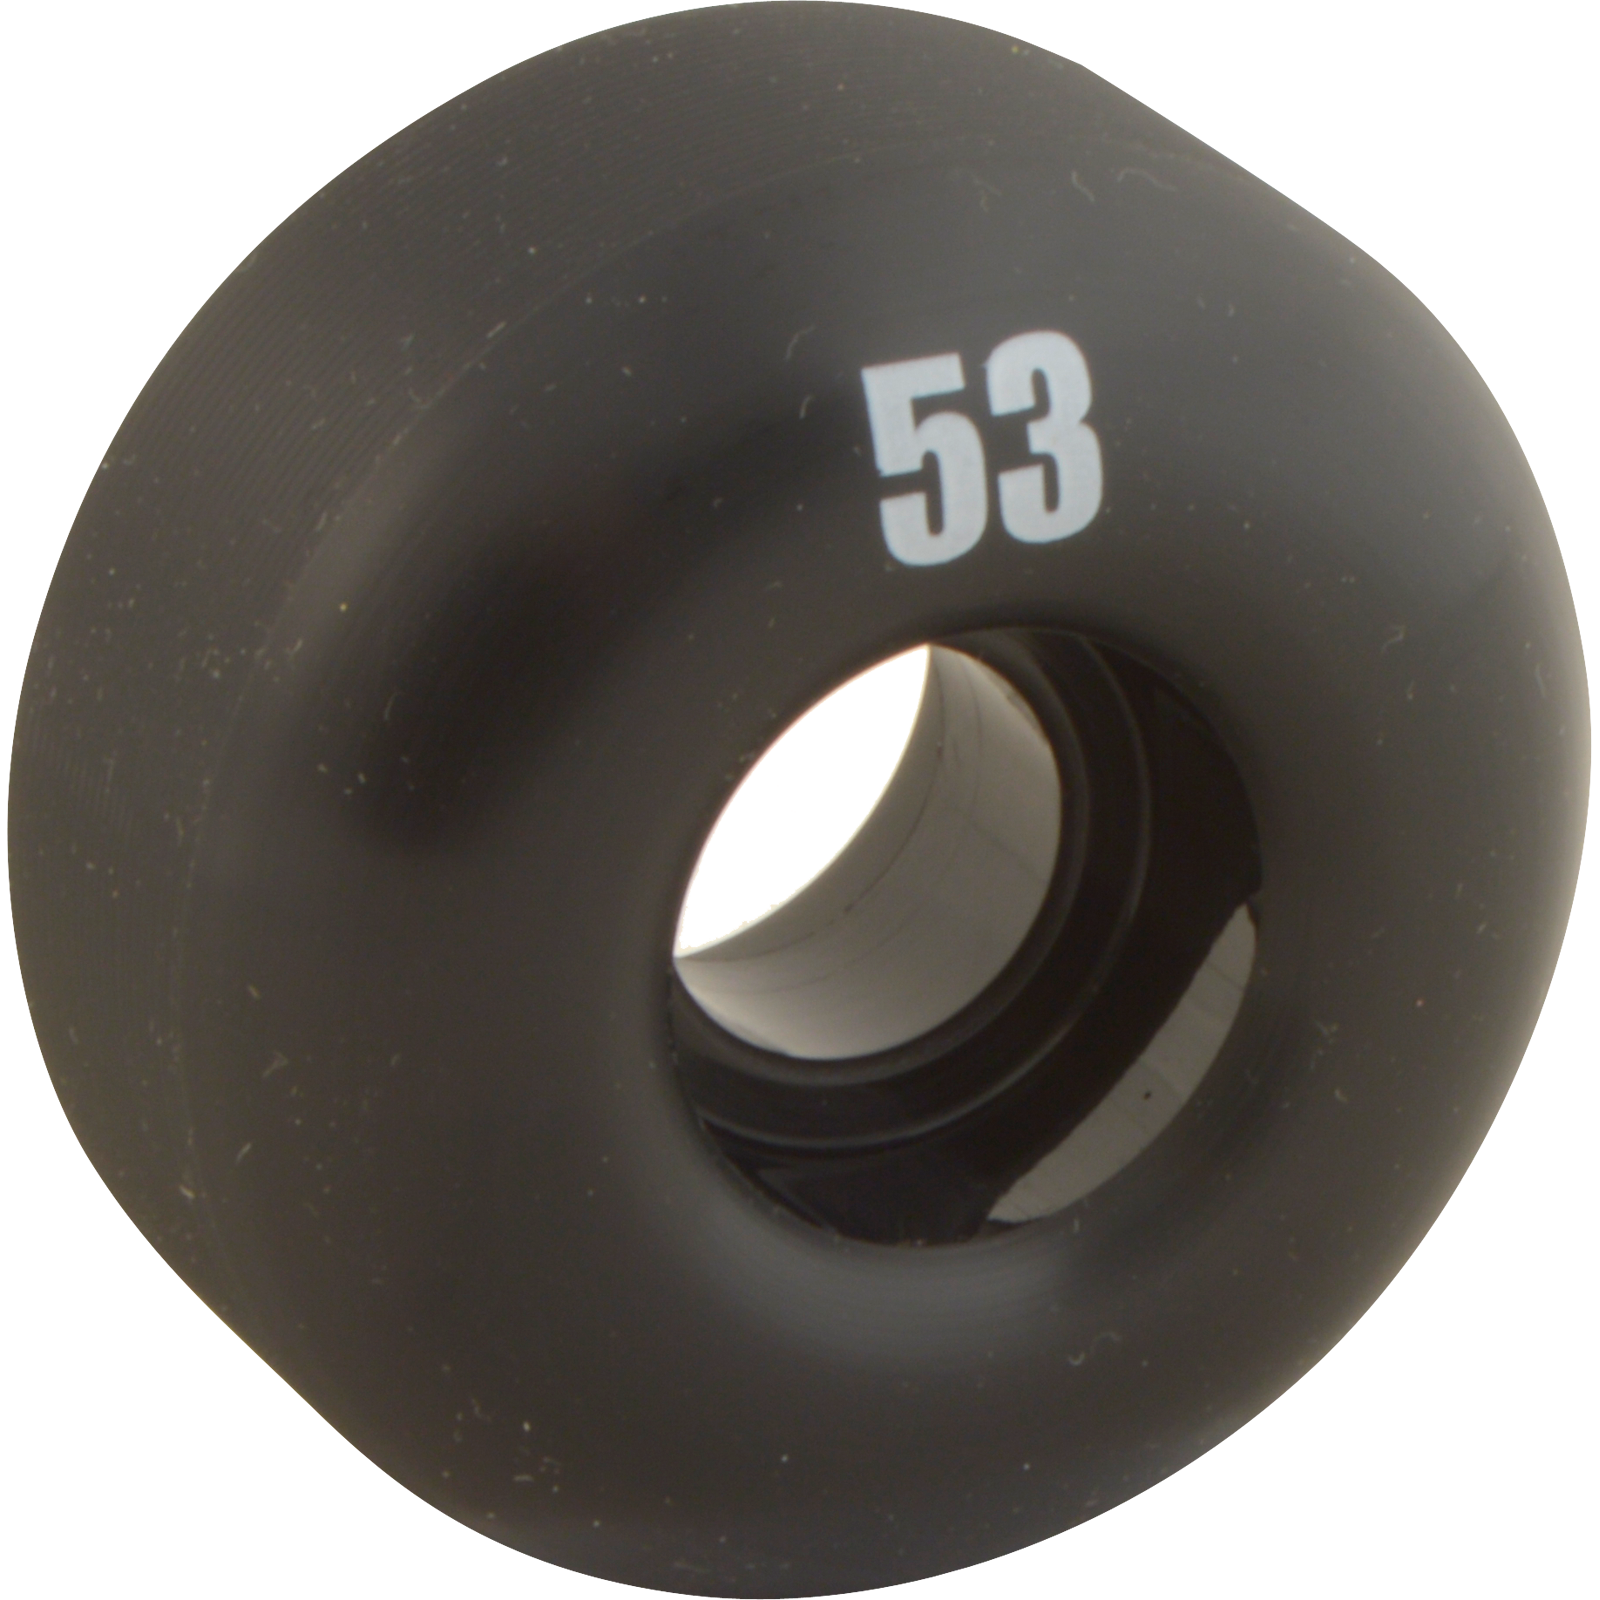 Essentials Black 53mm  Skateboard Wheels (Set of 4)